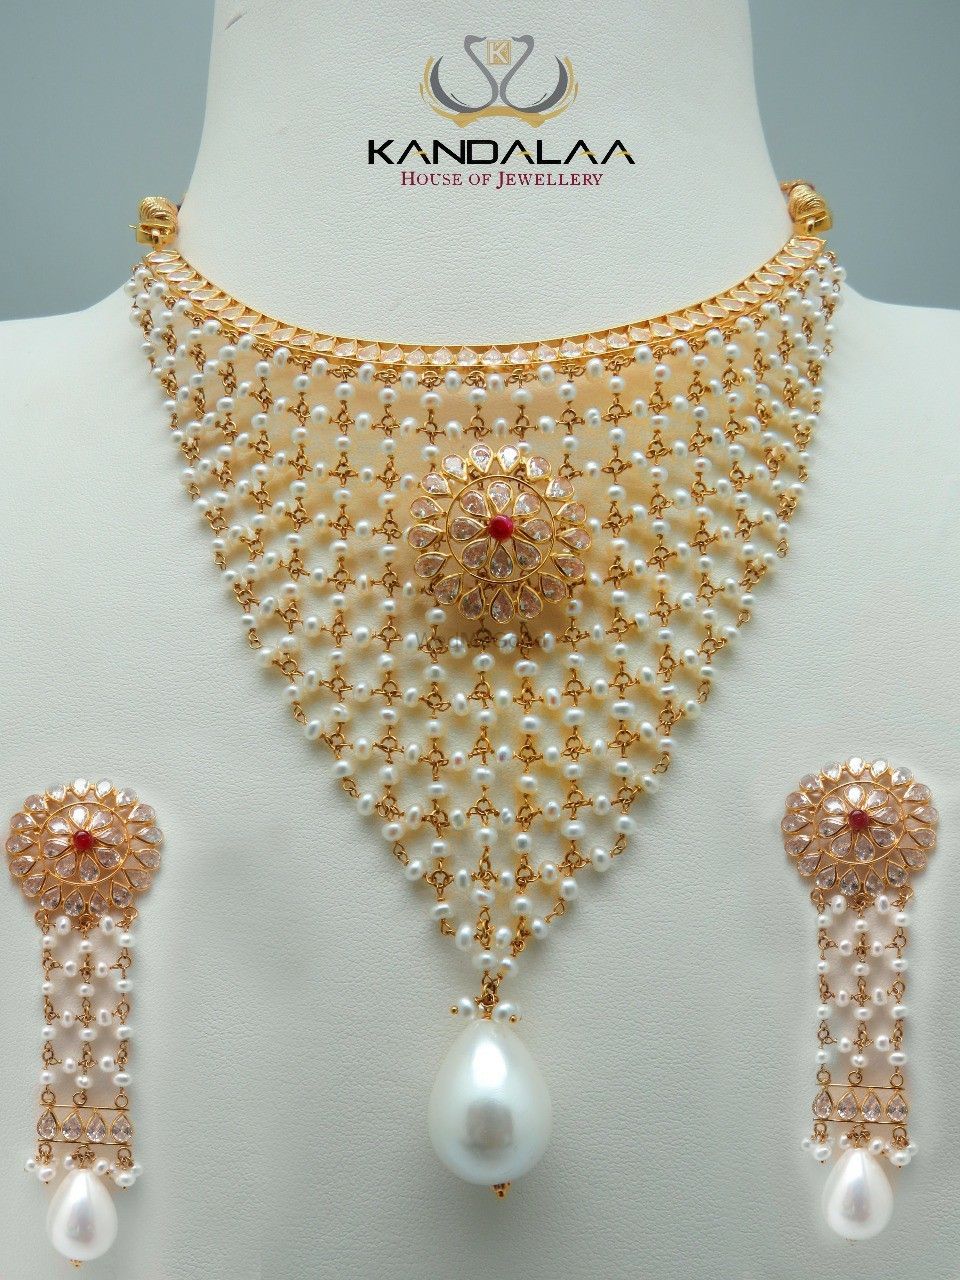 Photo By Kandalaa House of Jewellery - Jewellery